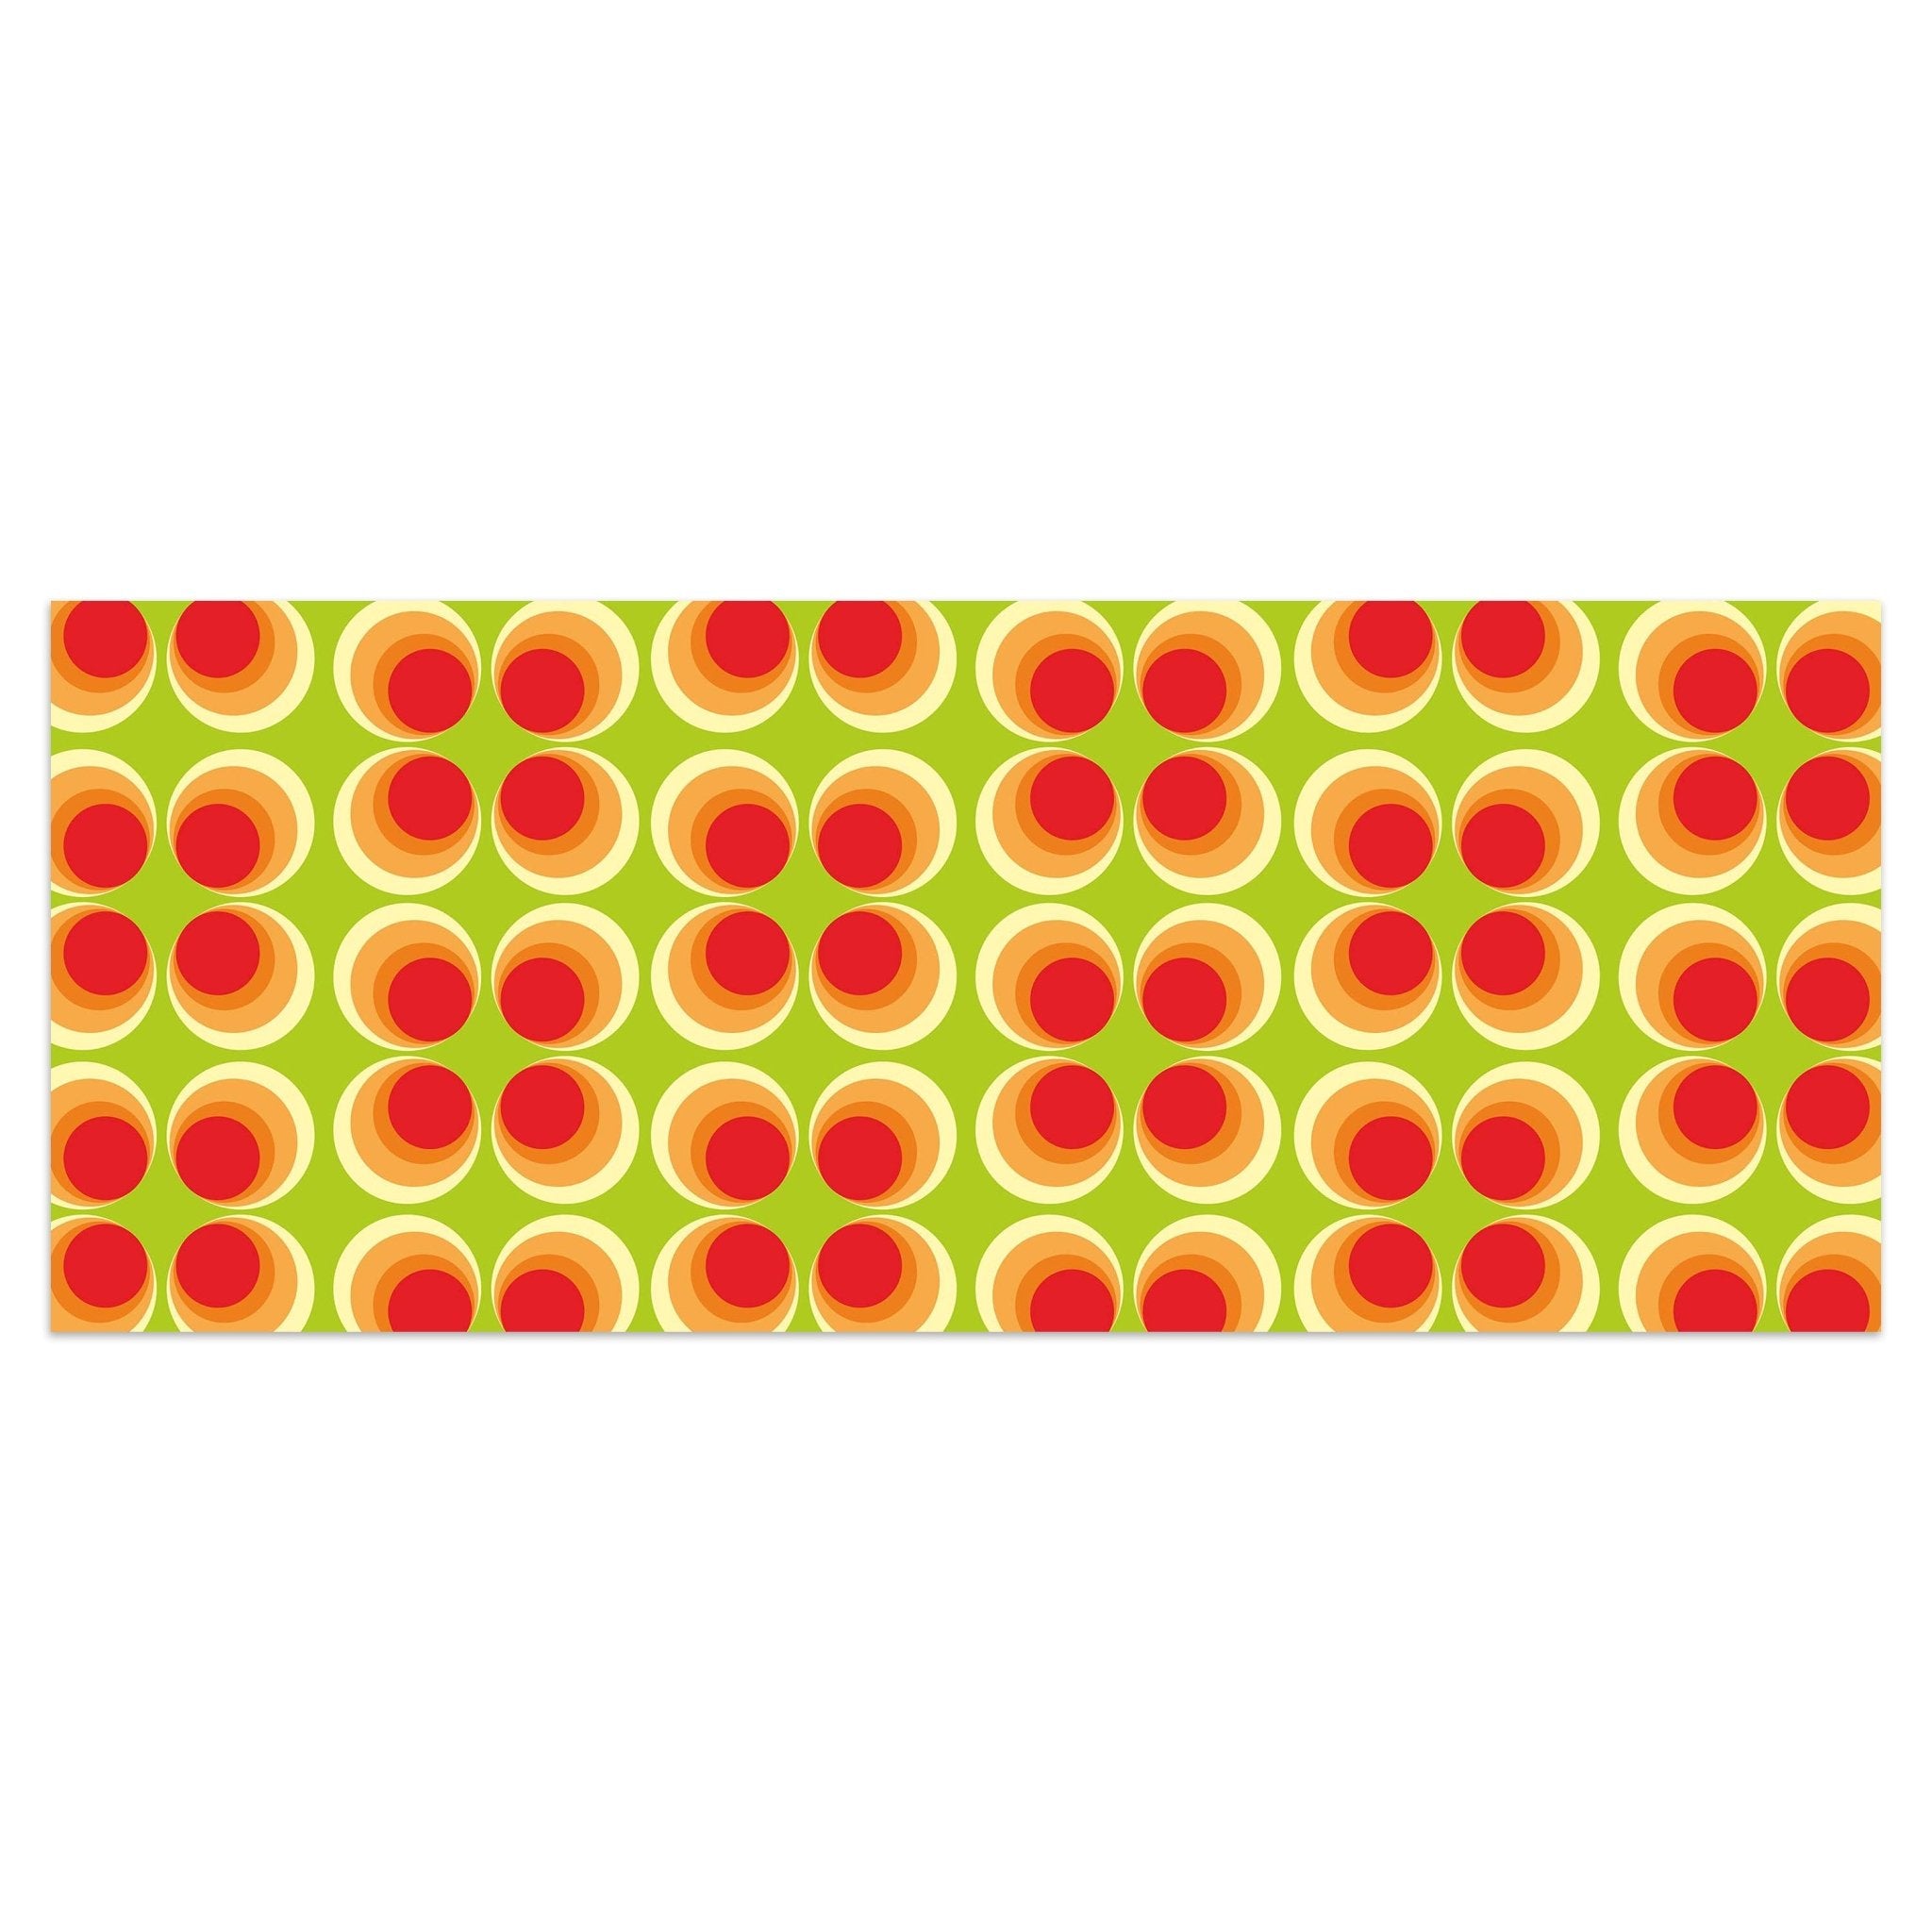 Leinwandbild Retrokreise Orange Muster M0098 kaufen - Bild 1